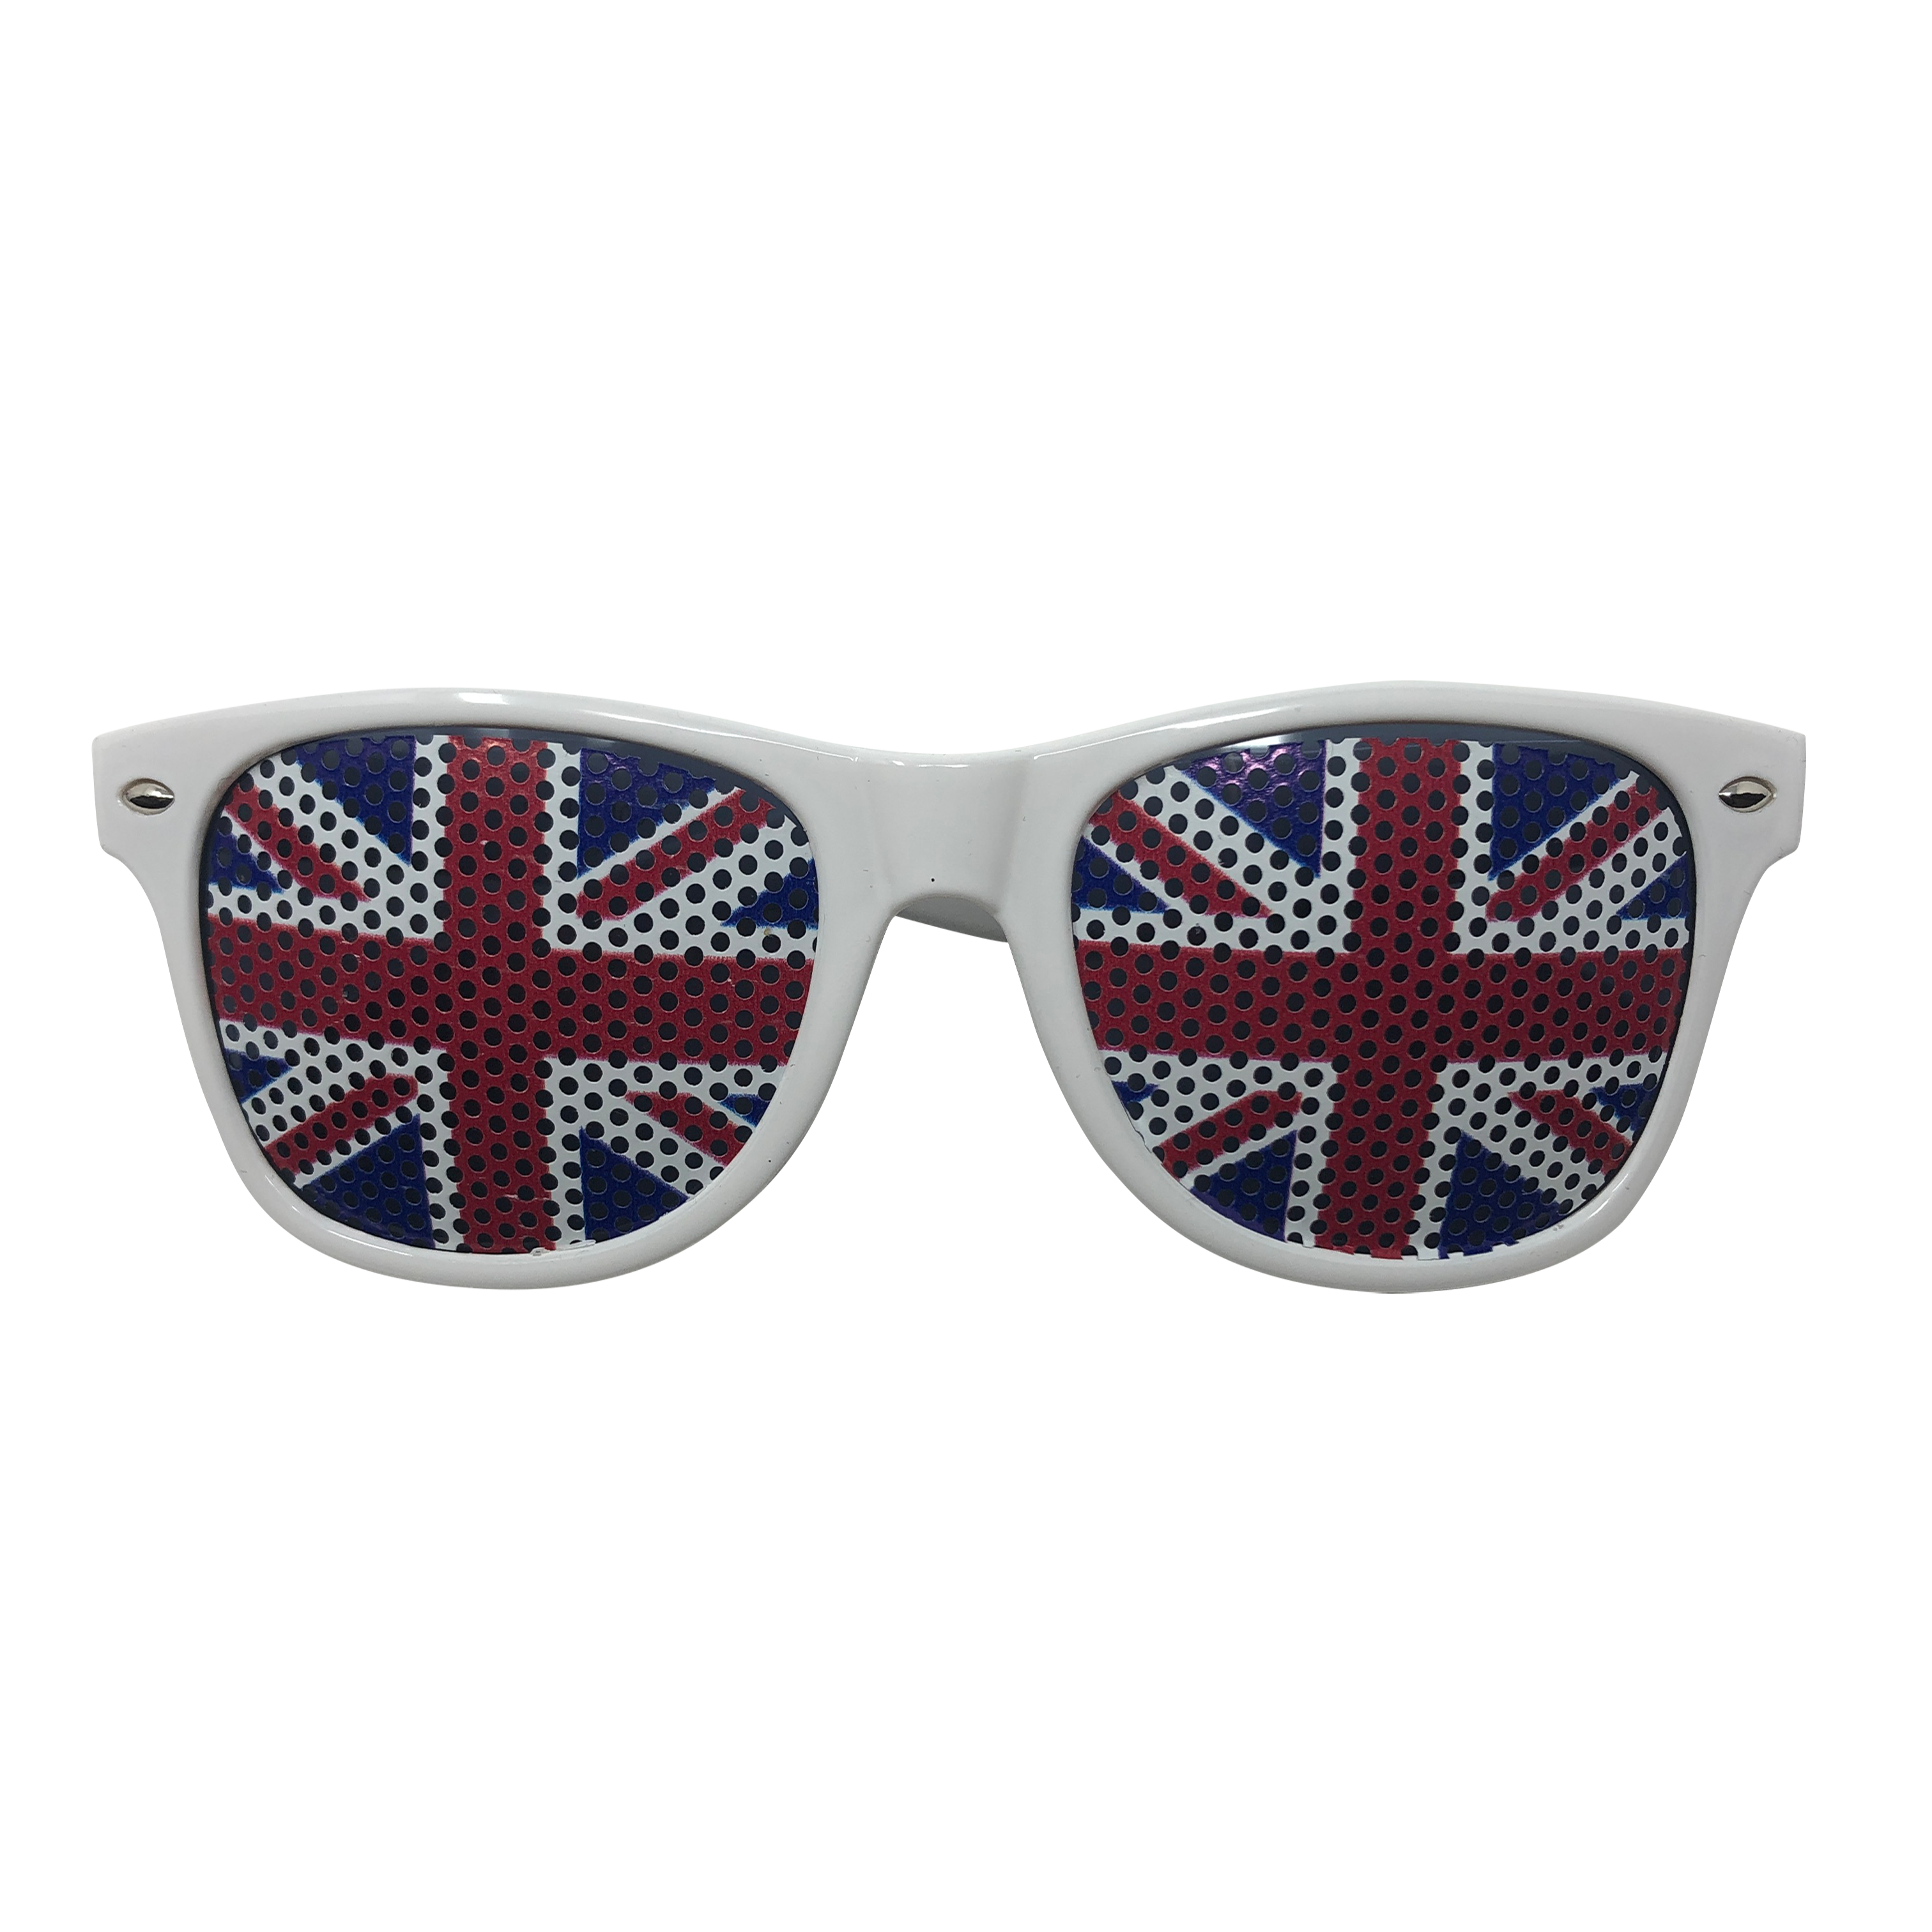 Novelty Sunglasses - Union Jack Lens Print